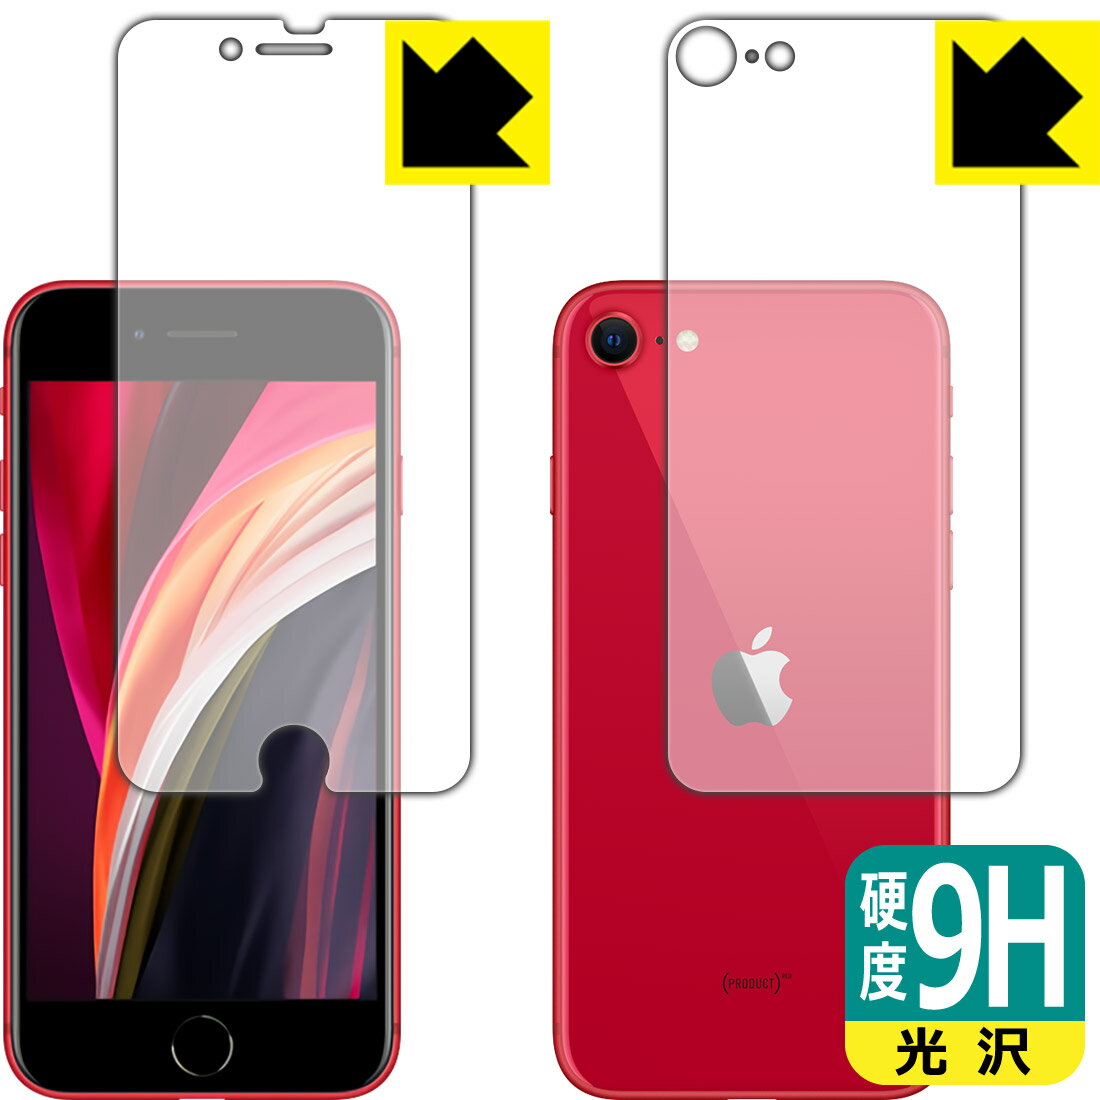 9H高硬度【光沢】保護フィルム iPhone SE (第2世代) 両面セット 【O型】 日本製 自社製造直販